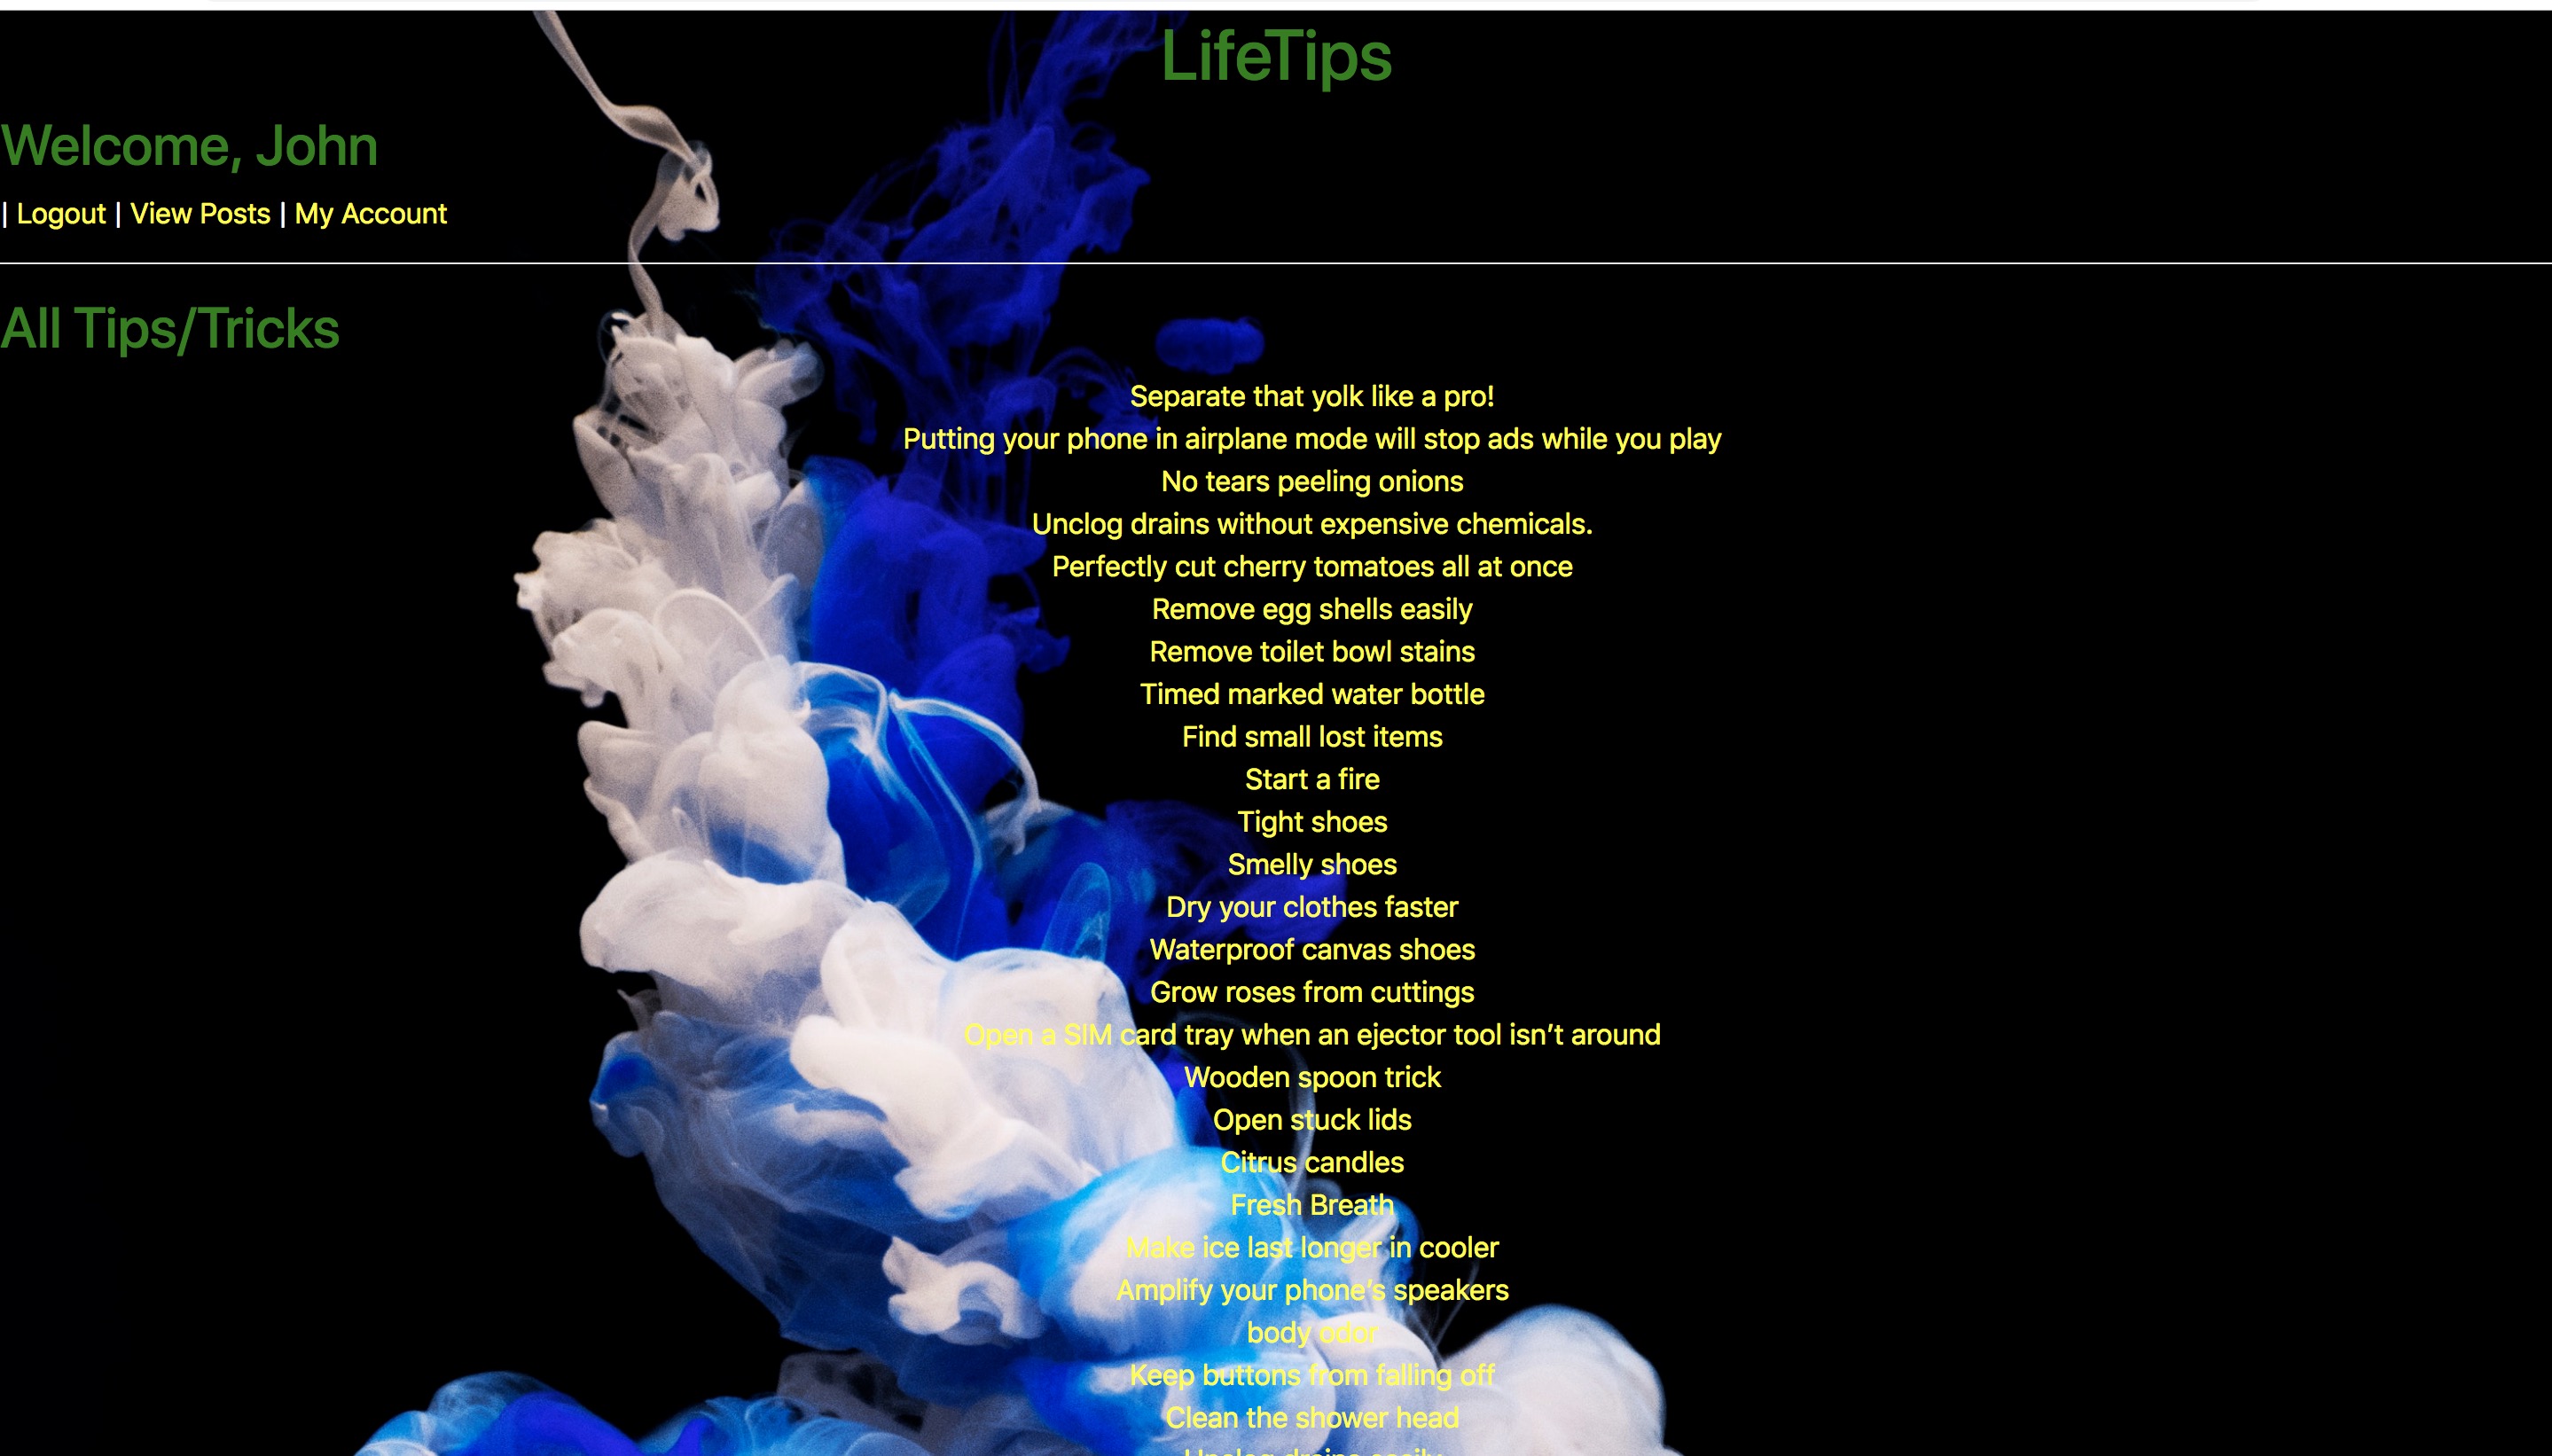 lifeTips